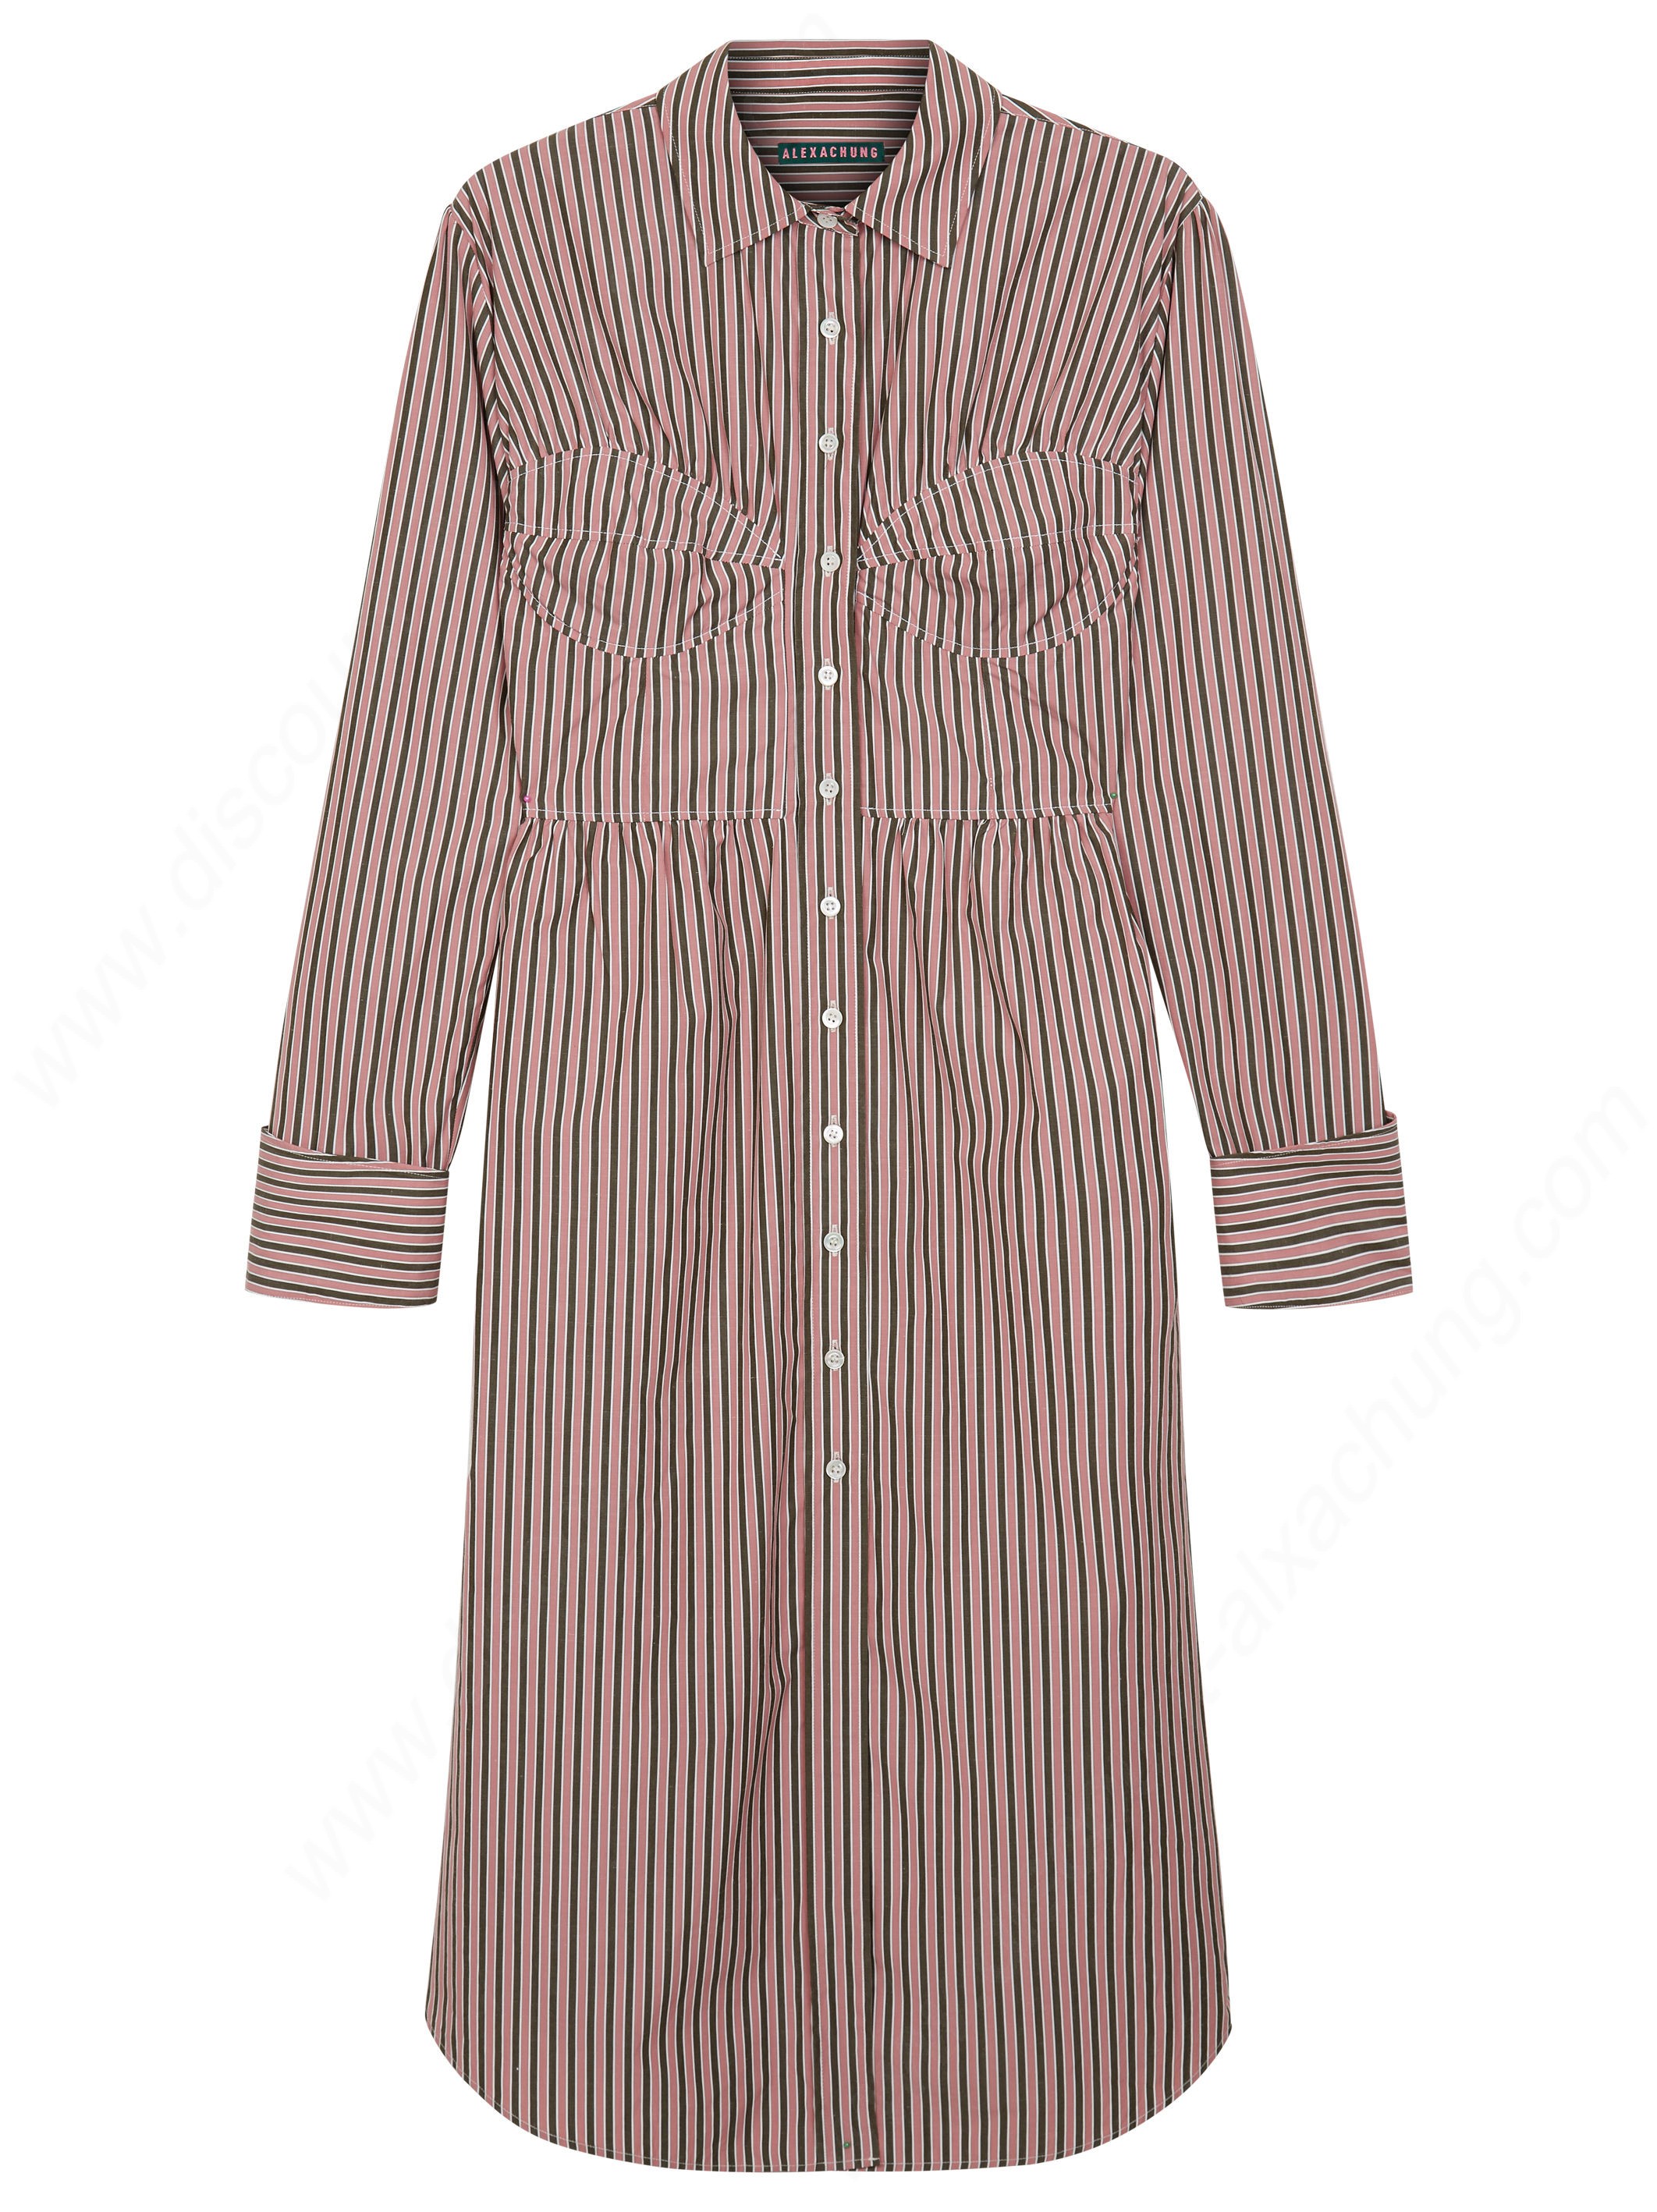 Alexachung Stripe Seamed T-Shirts Dress - Alexachung Stripe Seamed T-Shirts Dress